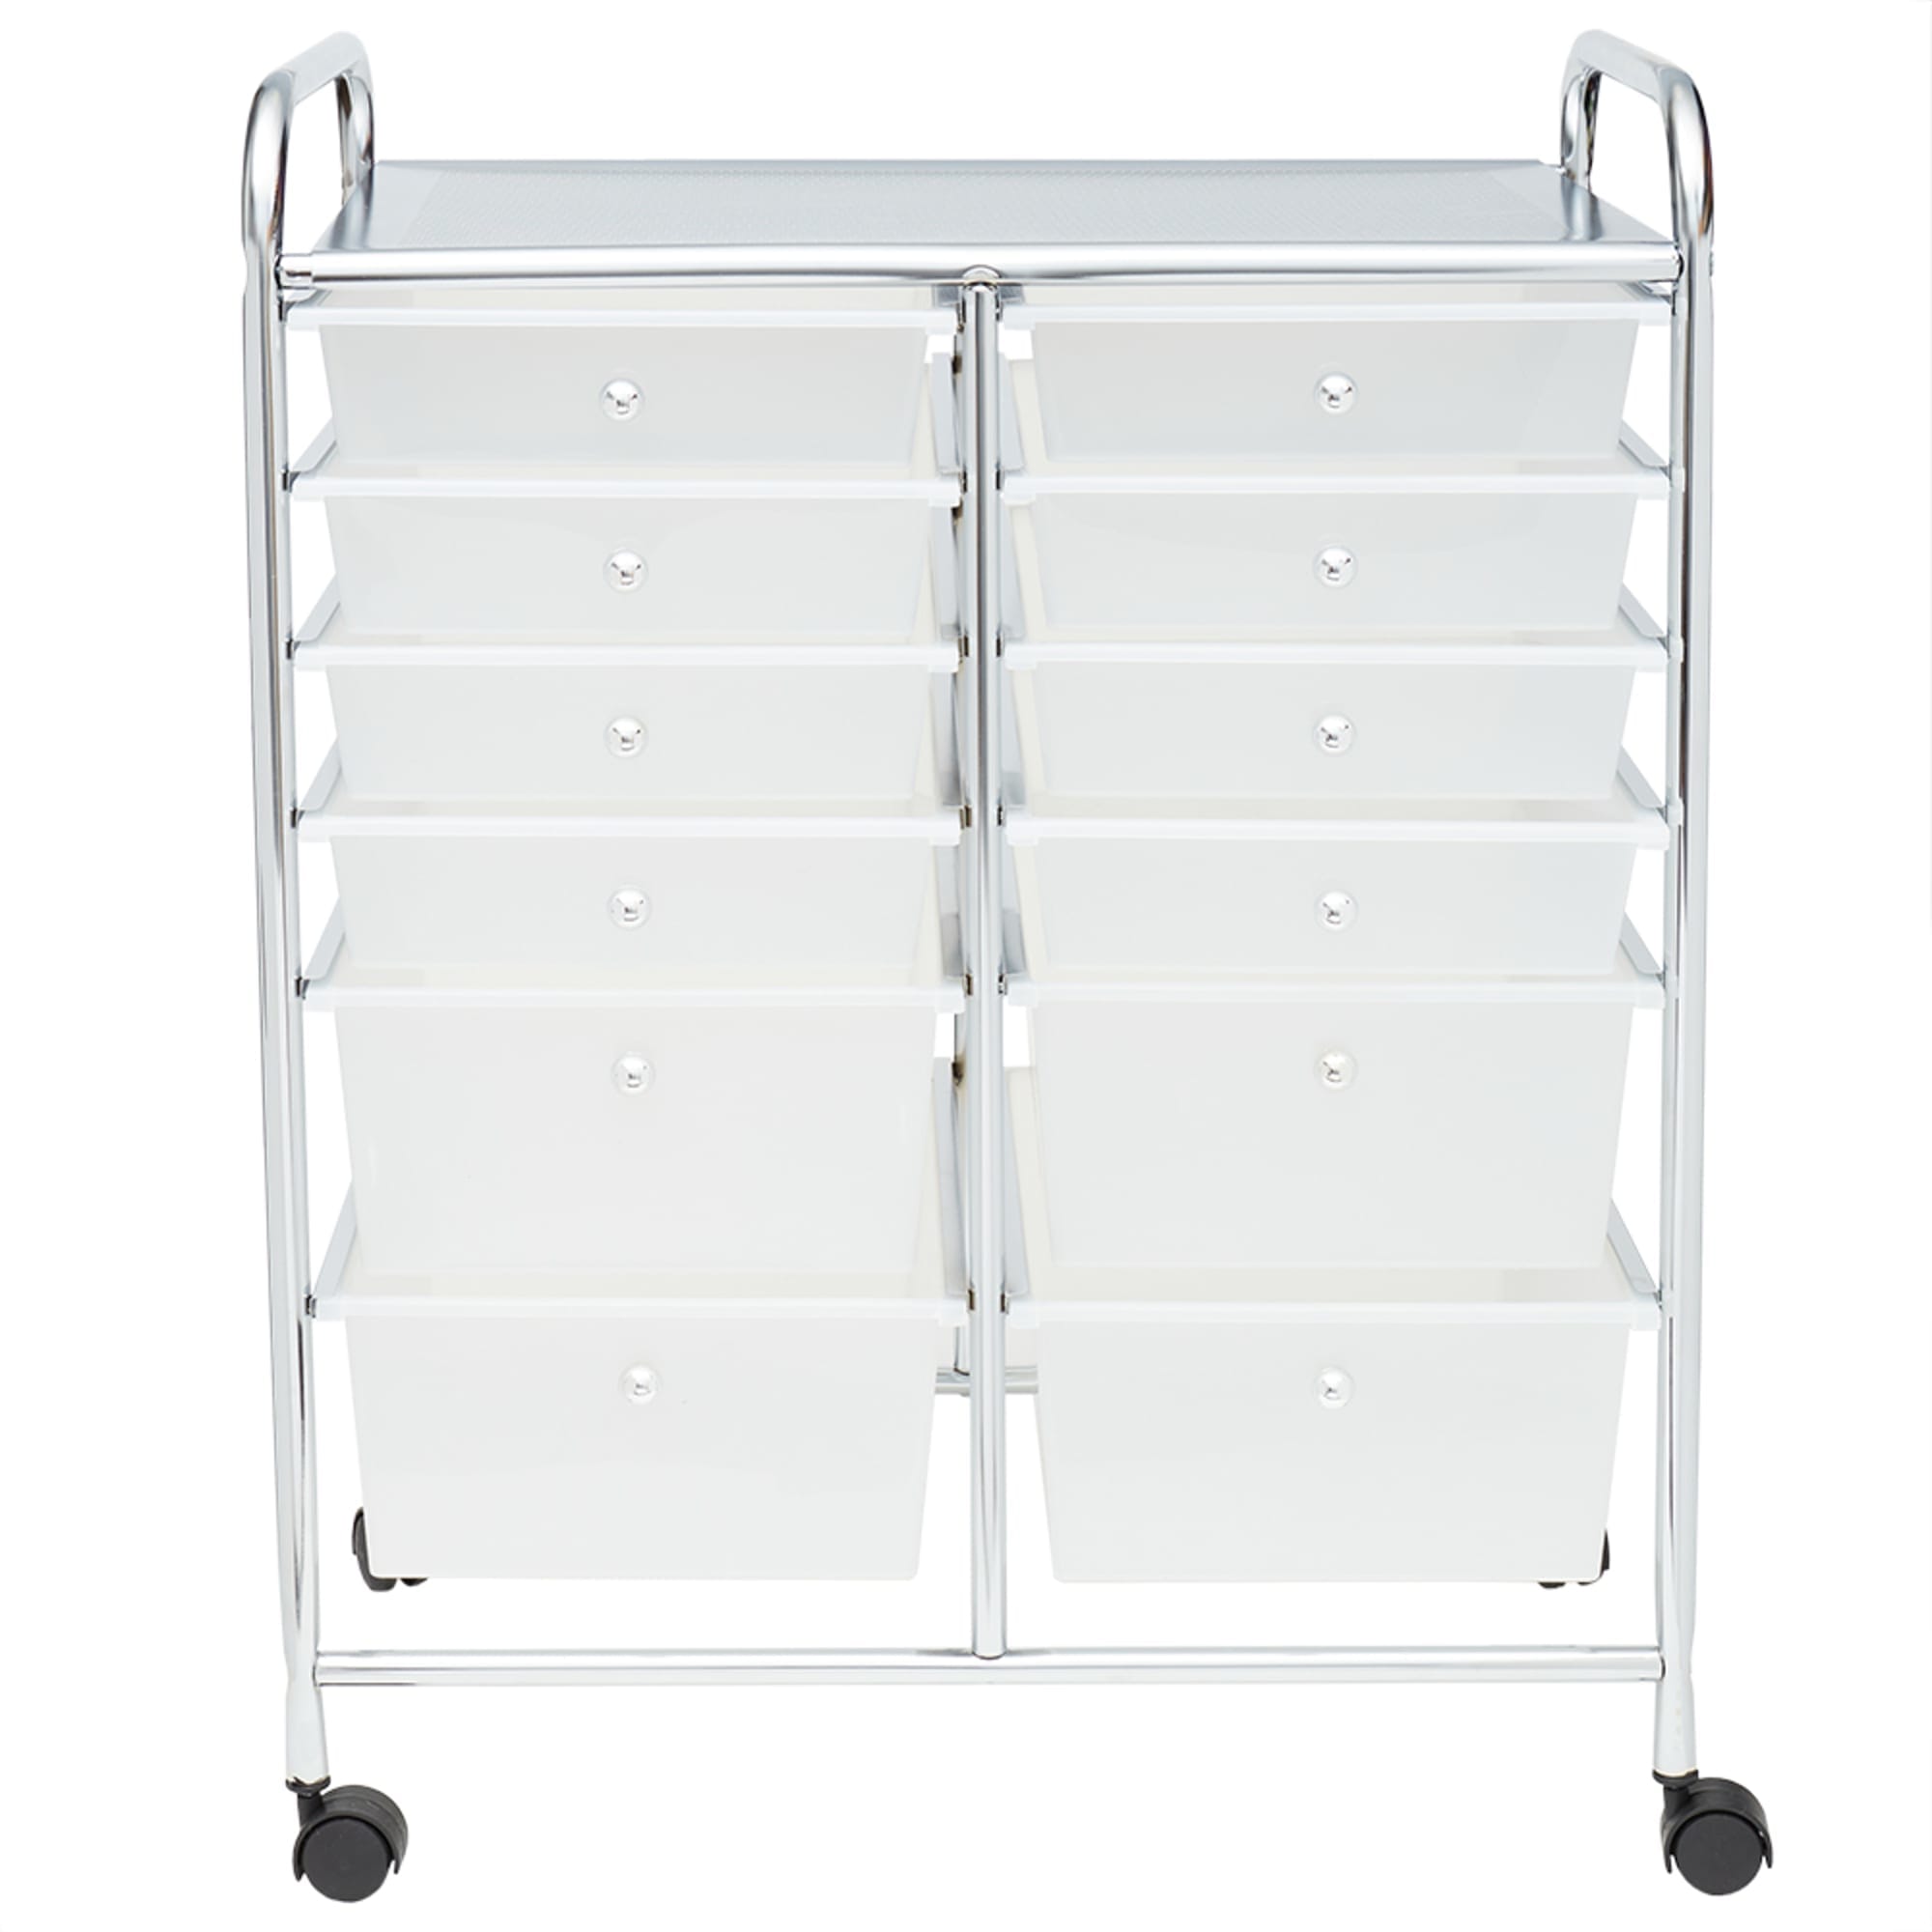 Home Basics 12-Drawer Storage Cart, White $70.00 EACH, CASE PACK OF 1